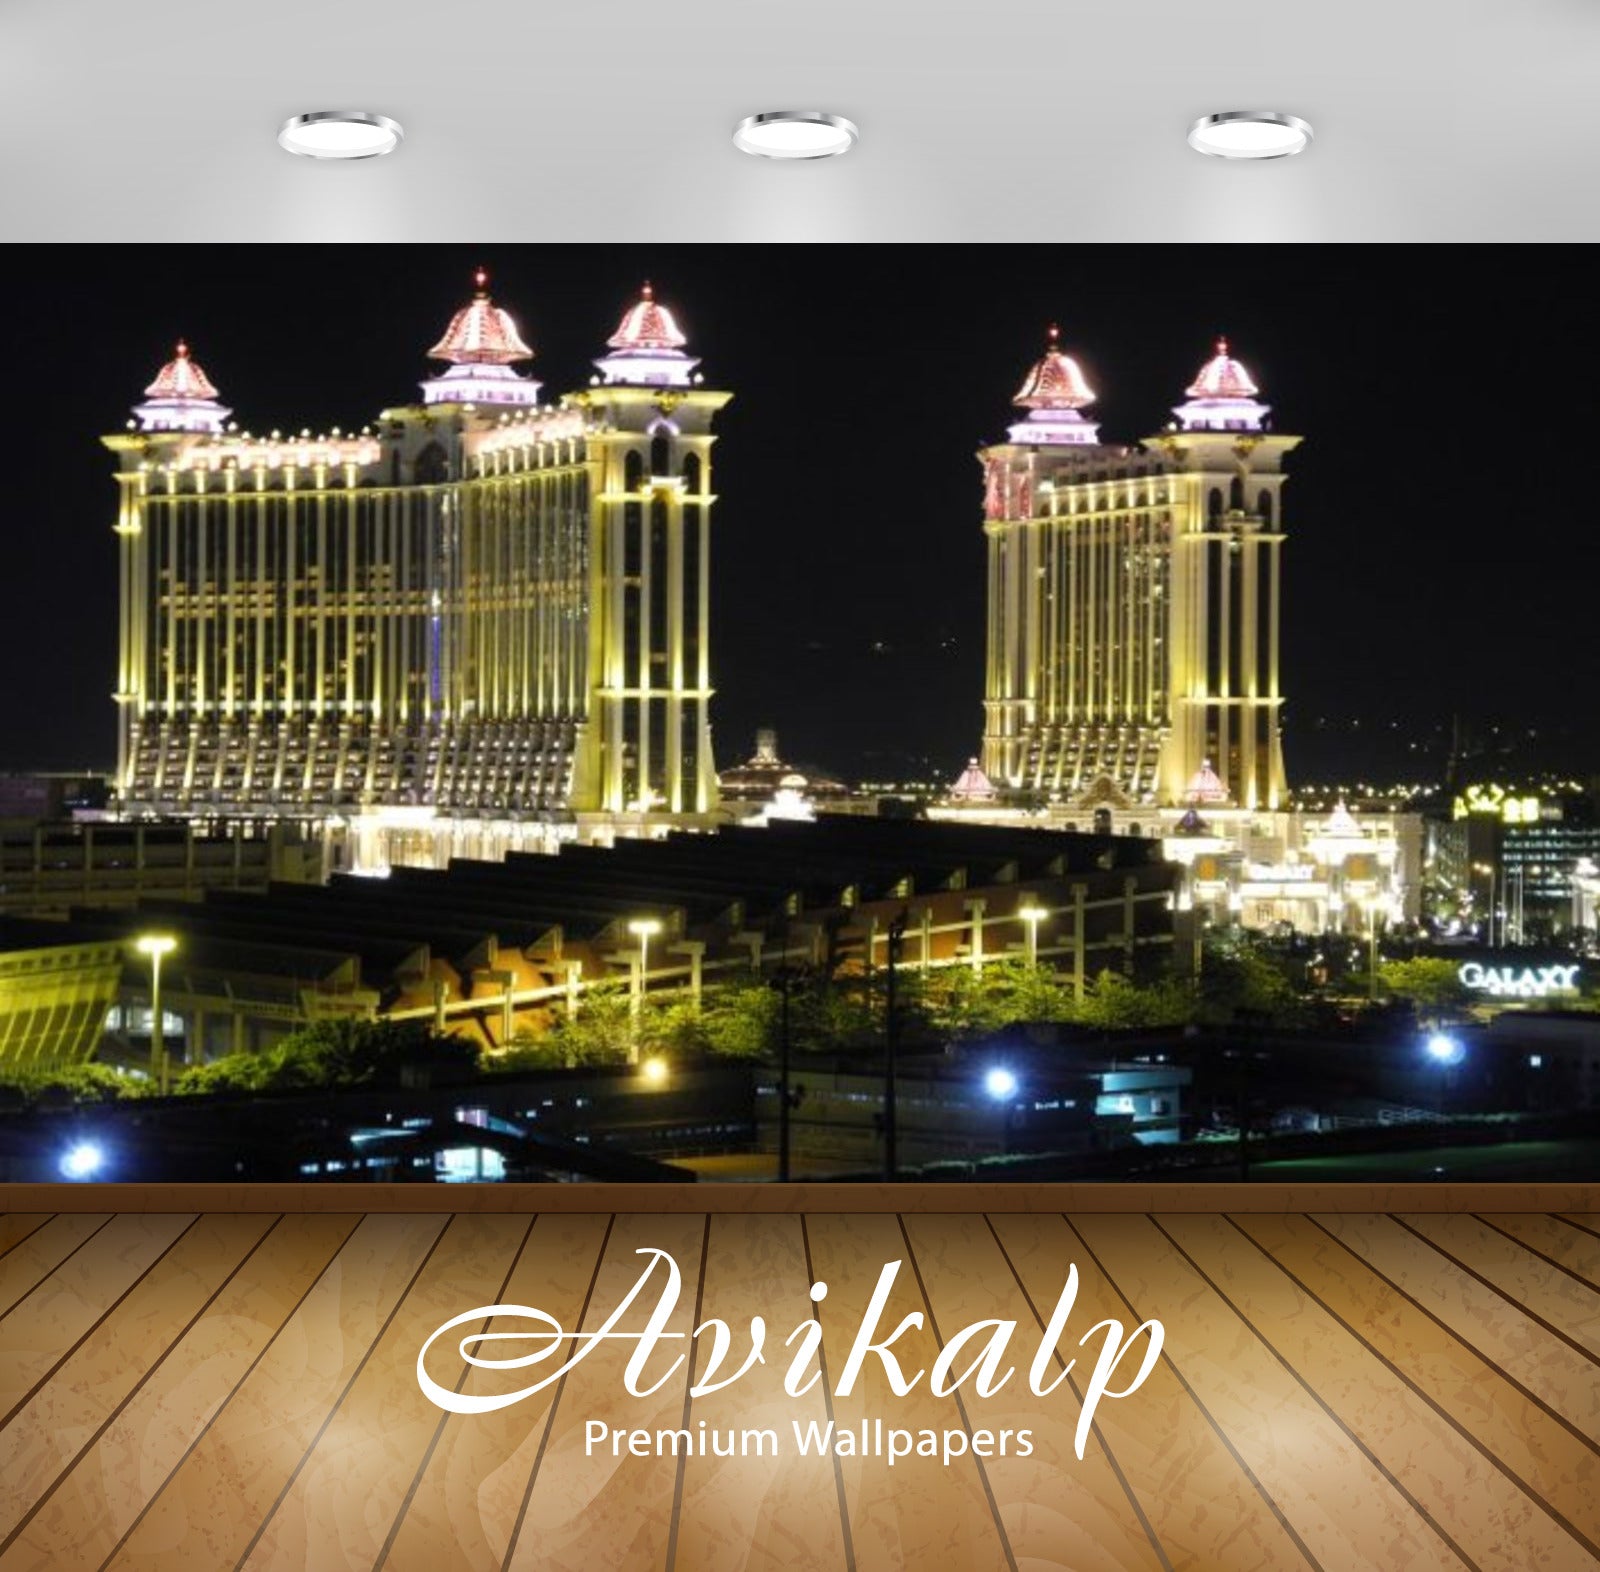 Avikalp Exclusive Awi2653 Galaxy Macau Casino Mega Resort Hotel With 5 Star Full HD Wallpapers for L